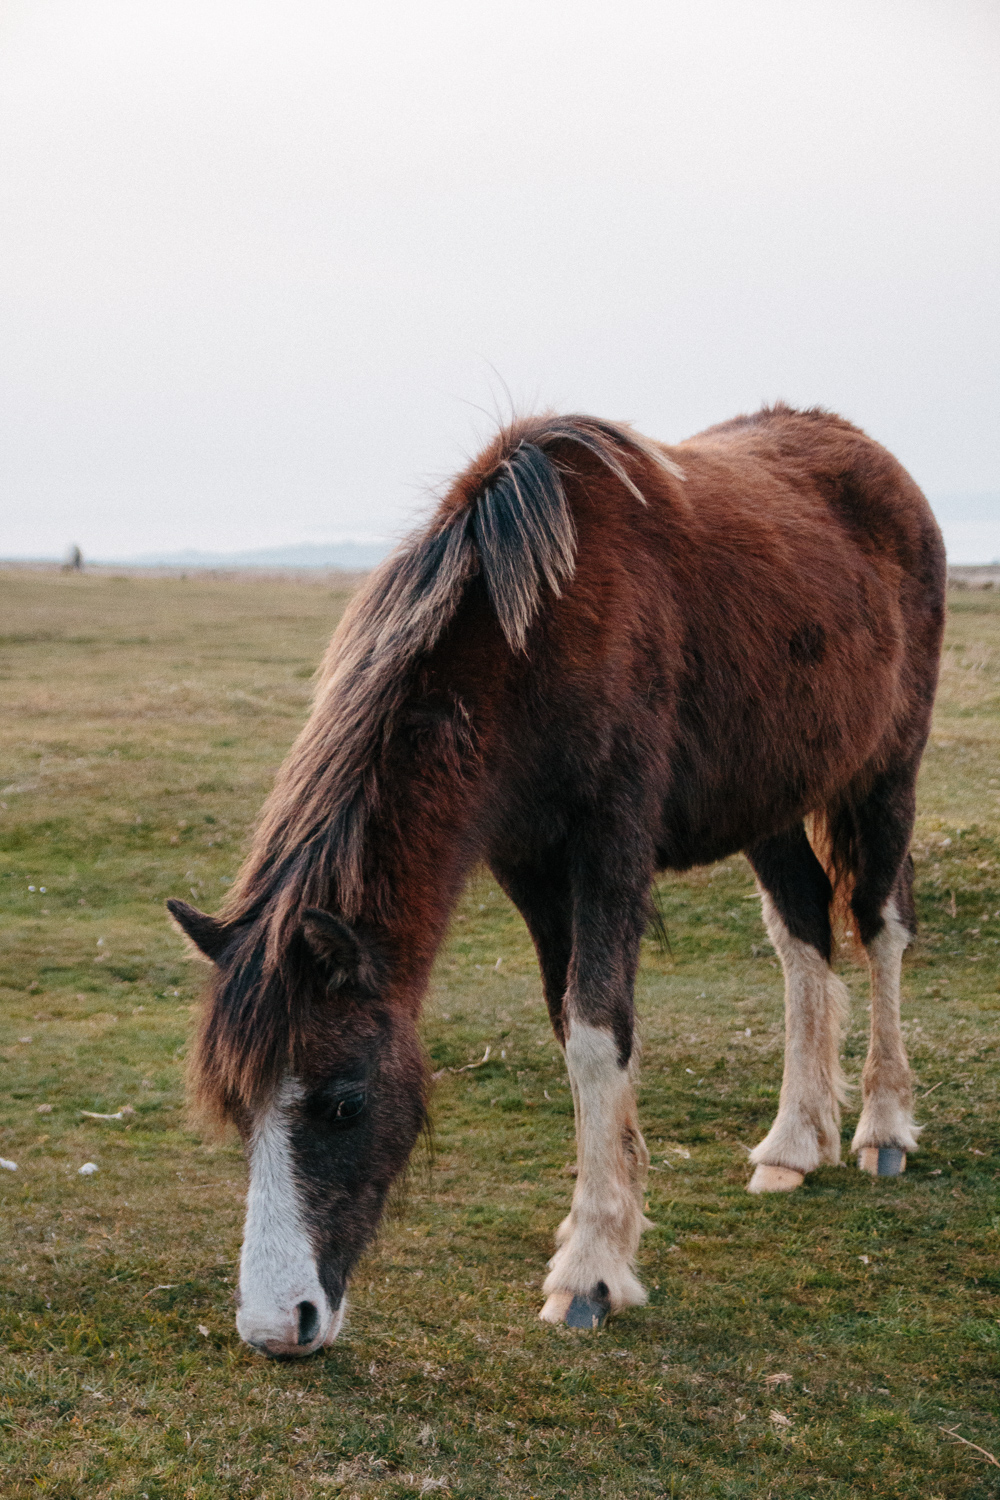 Wild Horses Near Port Eynon, Gower Peninsula